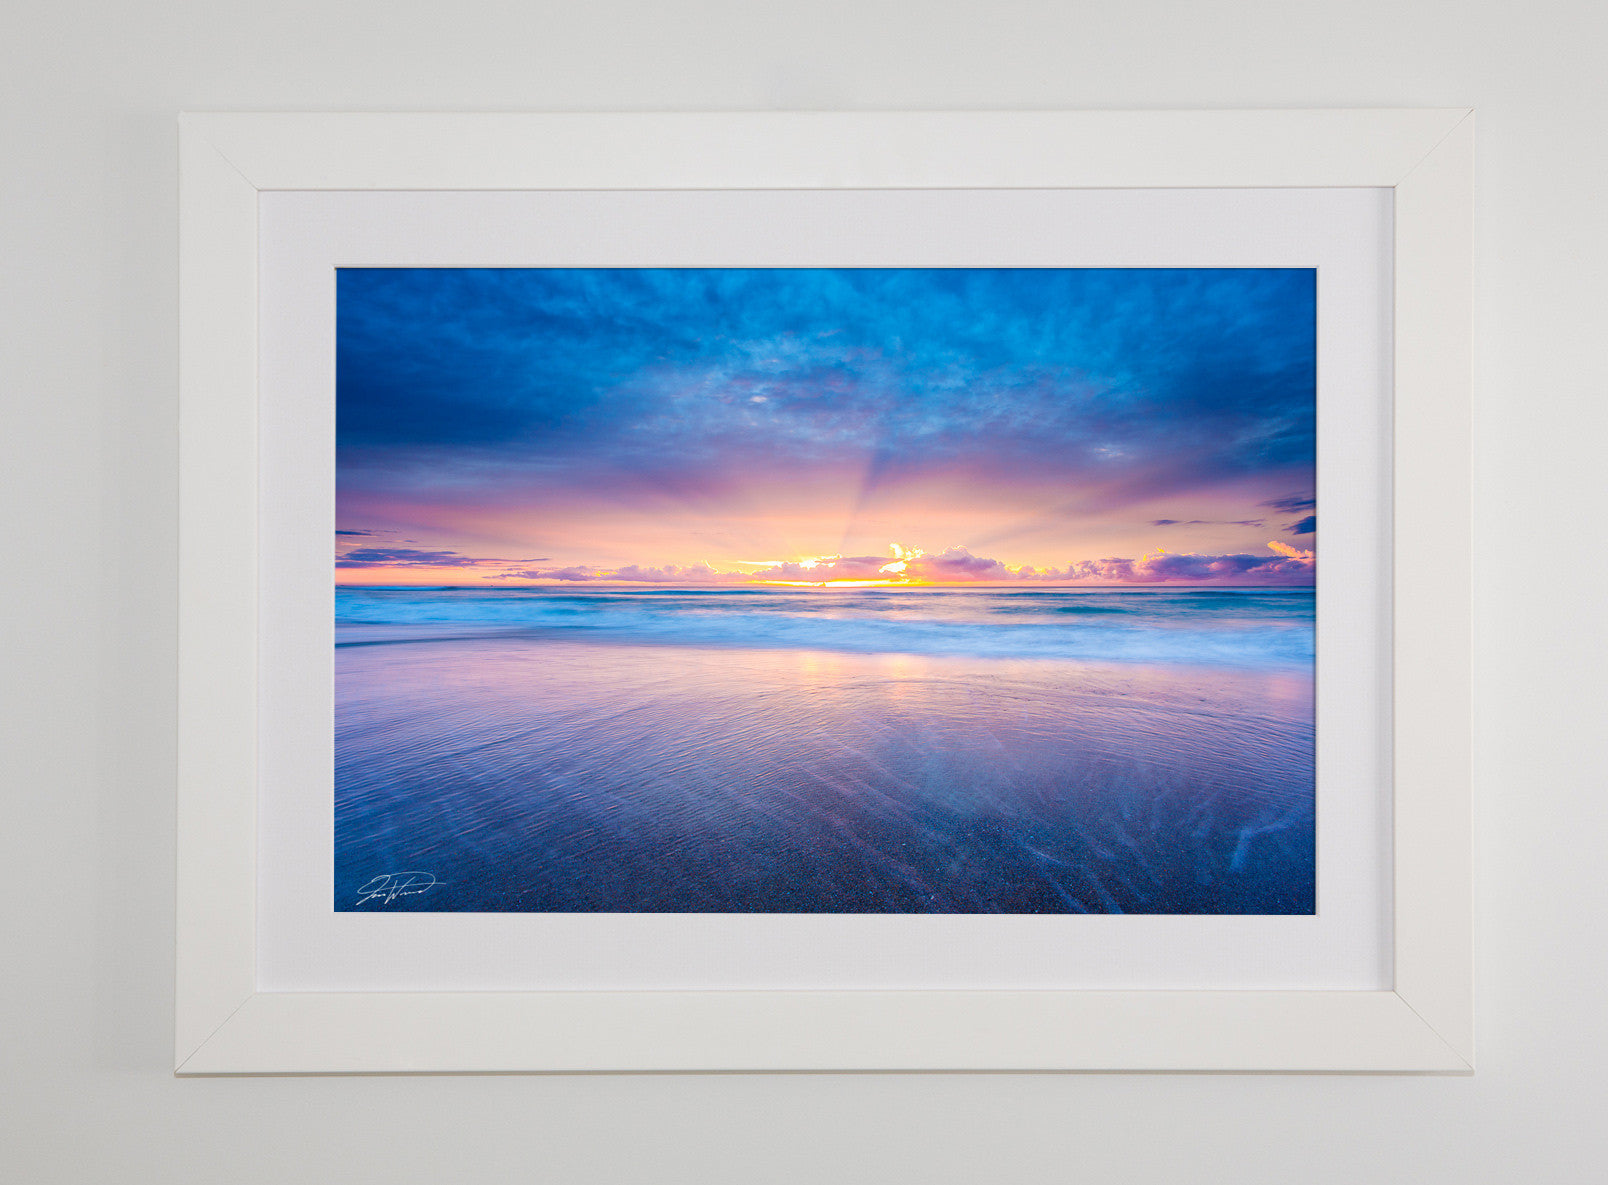 Sunrise in Surfers Paradise - Gold Coast Australia